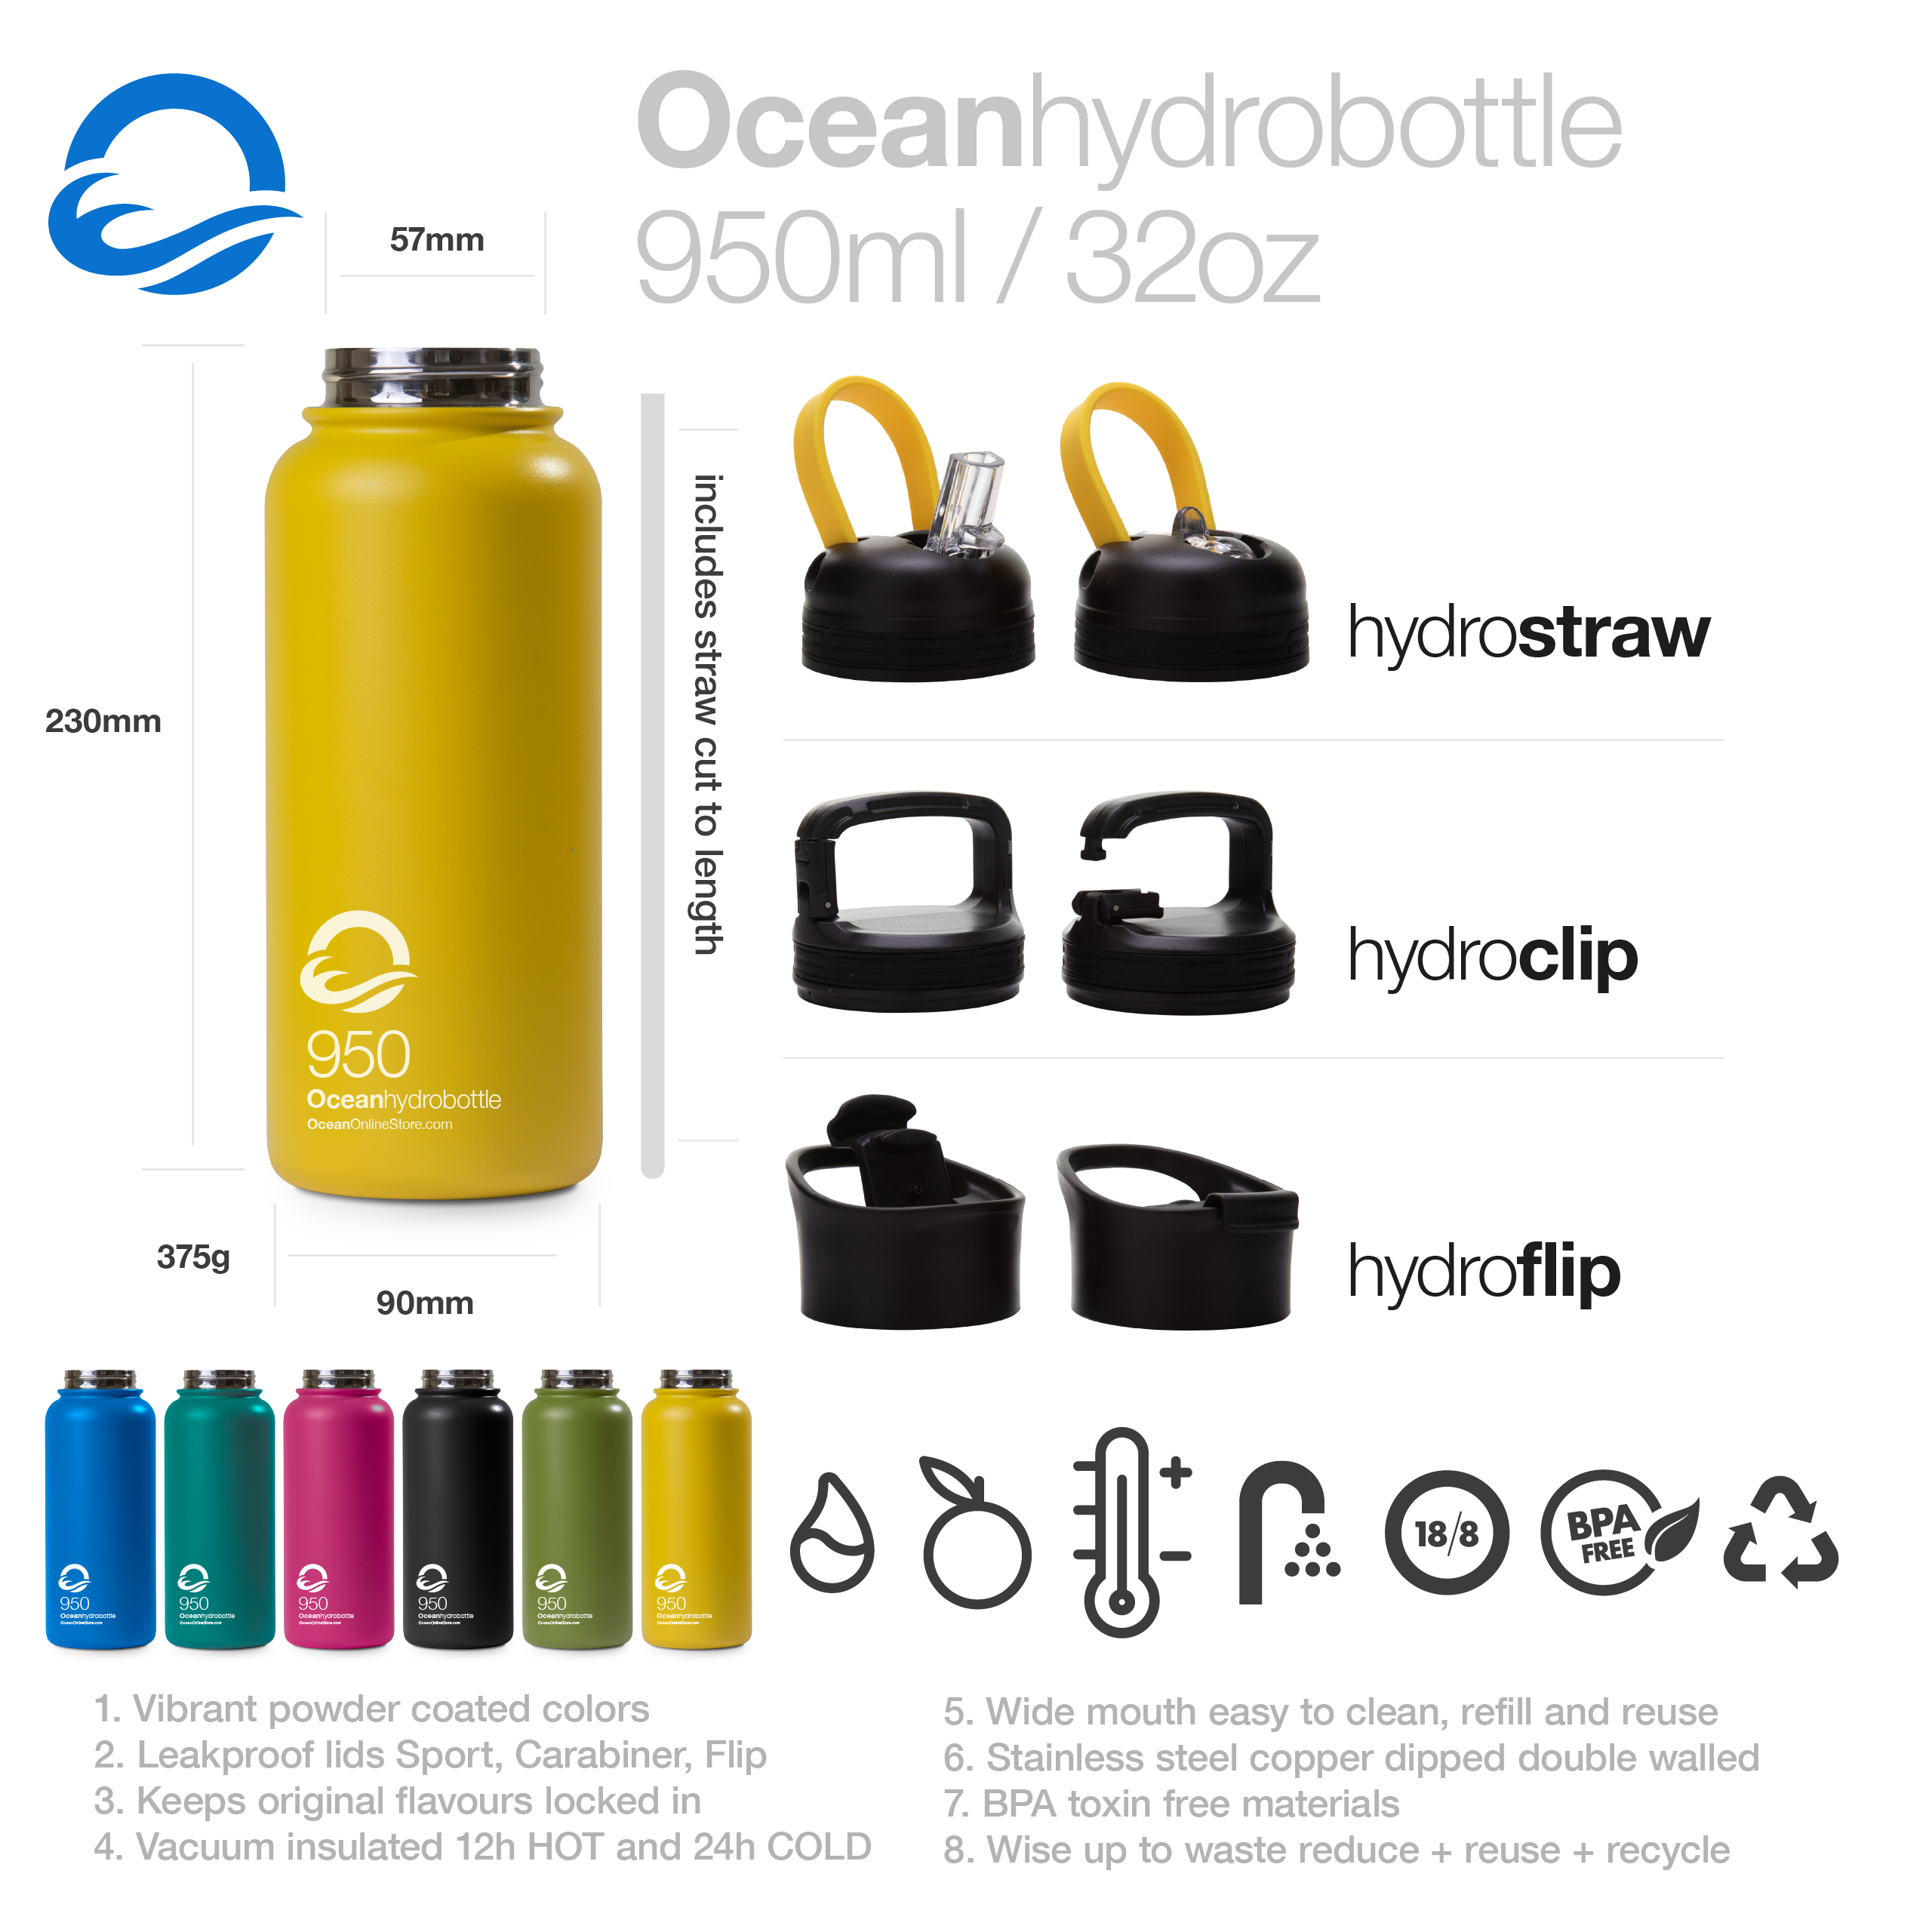 Oceanhydrobottle 950ml / 32oz - Sunshine Yellow